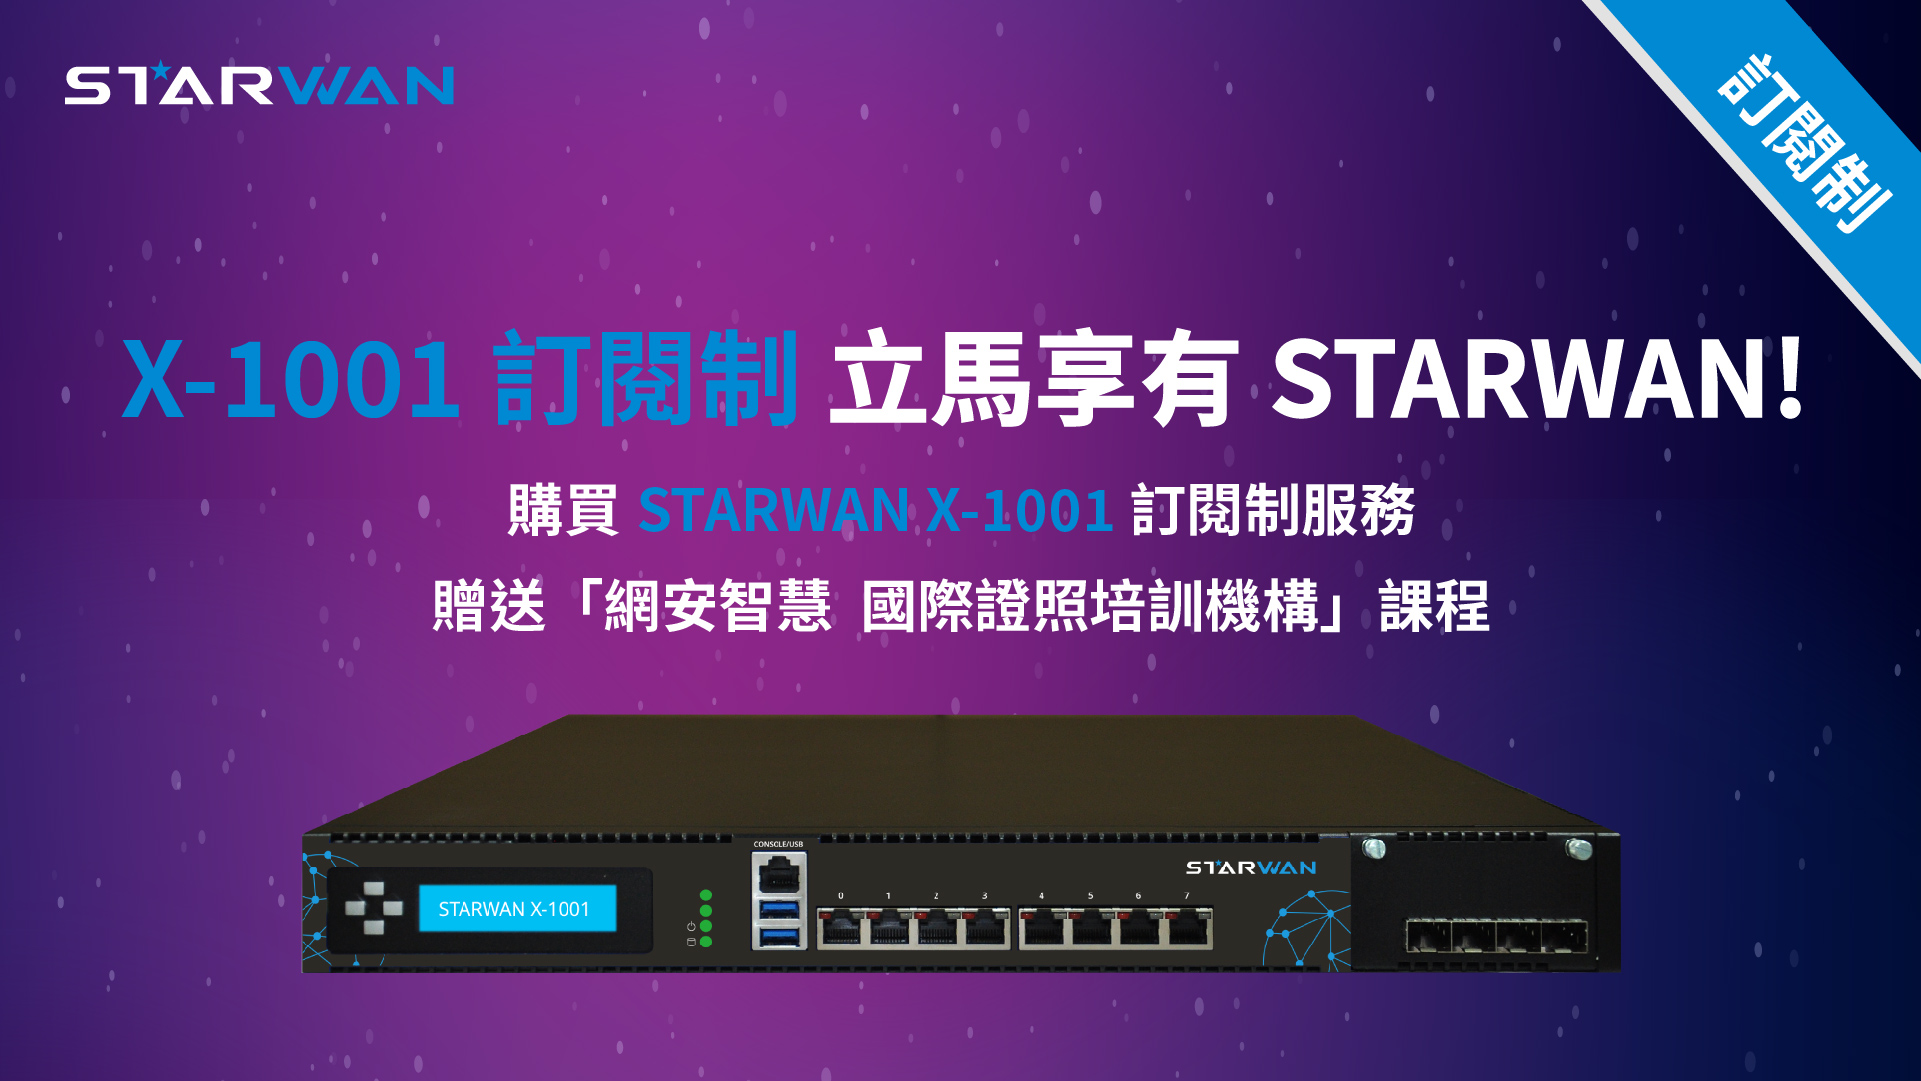 STARWAN Networks 全新上市「X-1001 訂閱制」立馬享有！